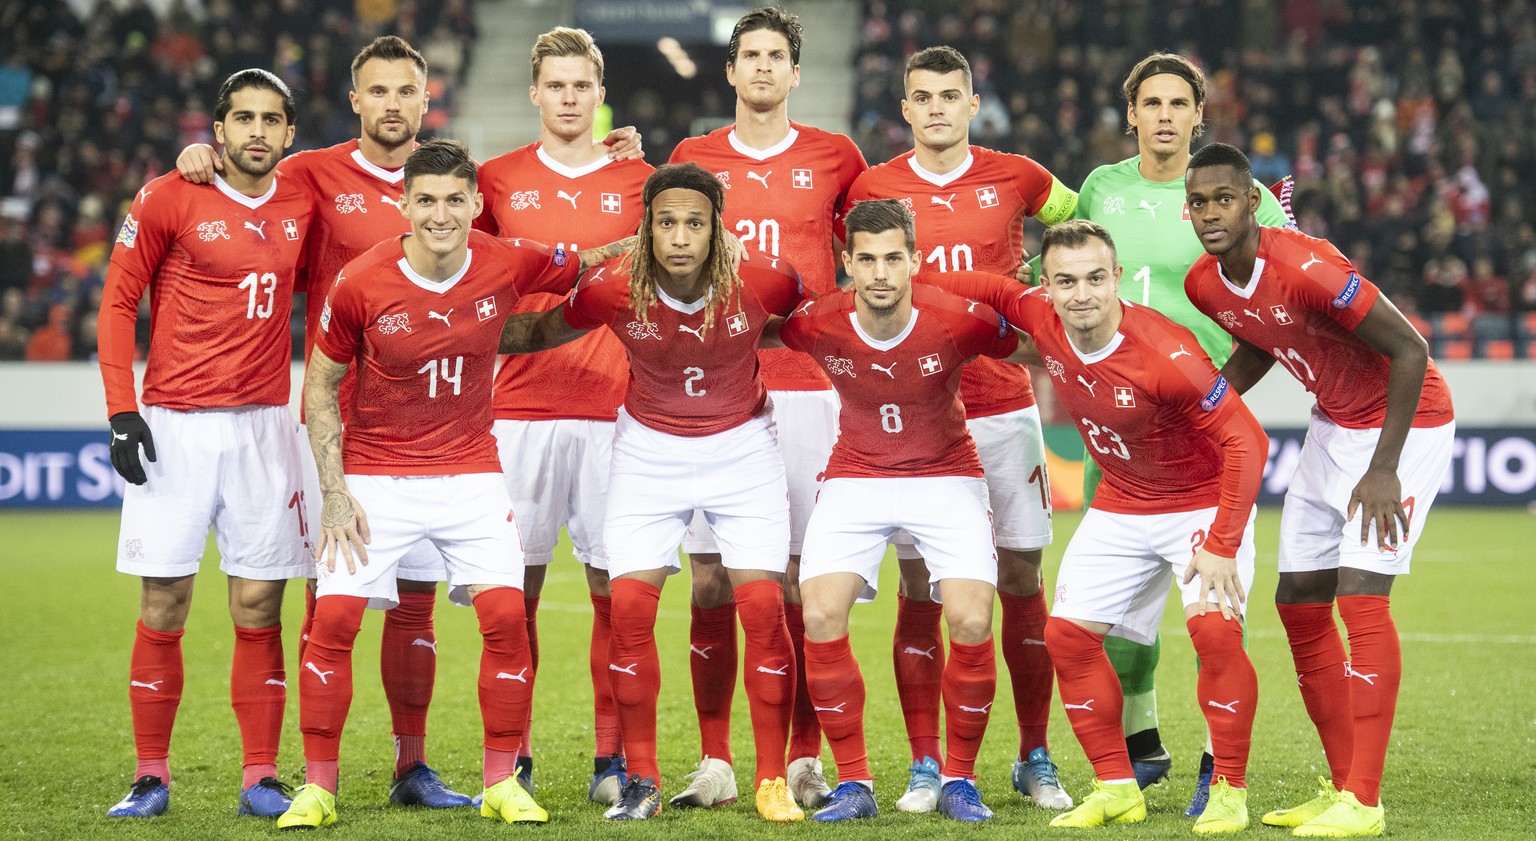 The team of Switzerland pose during the UEFA Nations League soccer match between Switzerland and Belgium at the swissporarena stadium in Lucerne, Switzerland, on Sunday, November 18, 2018. (KEYSTONE/E ...